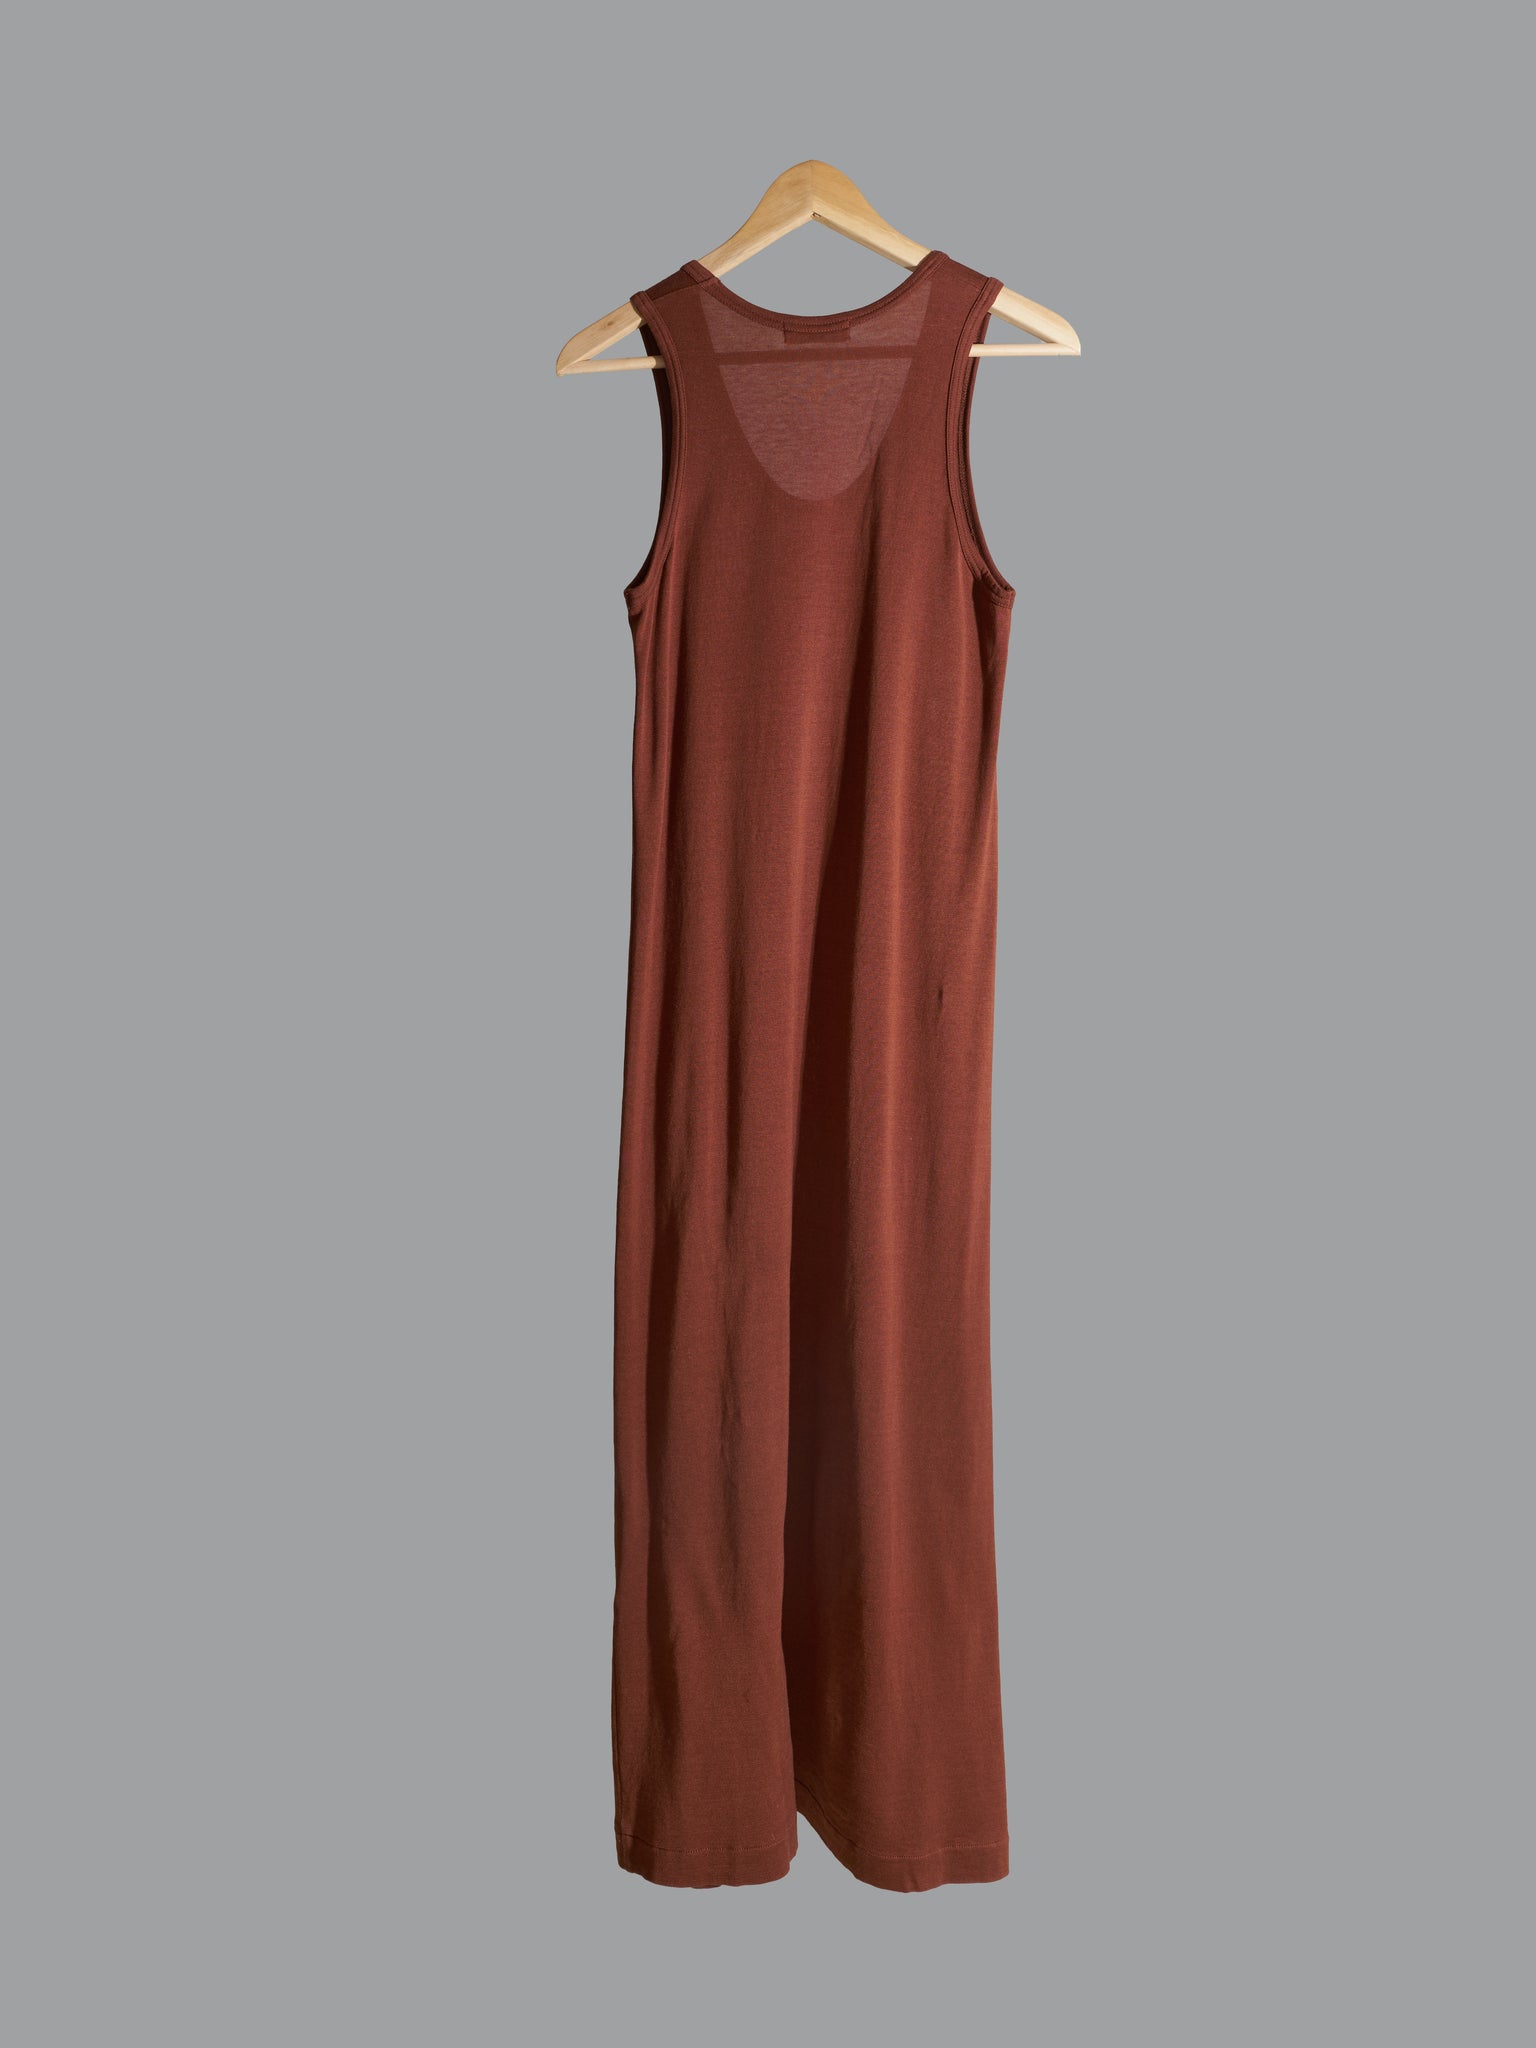 Comme des Garcons SS1996 brown cotton flower print sleeveless dress - S